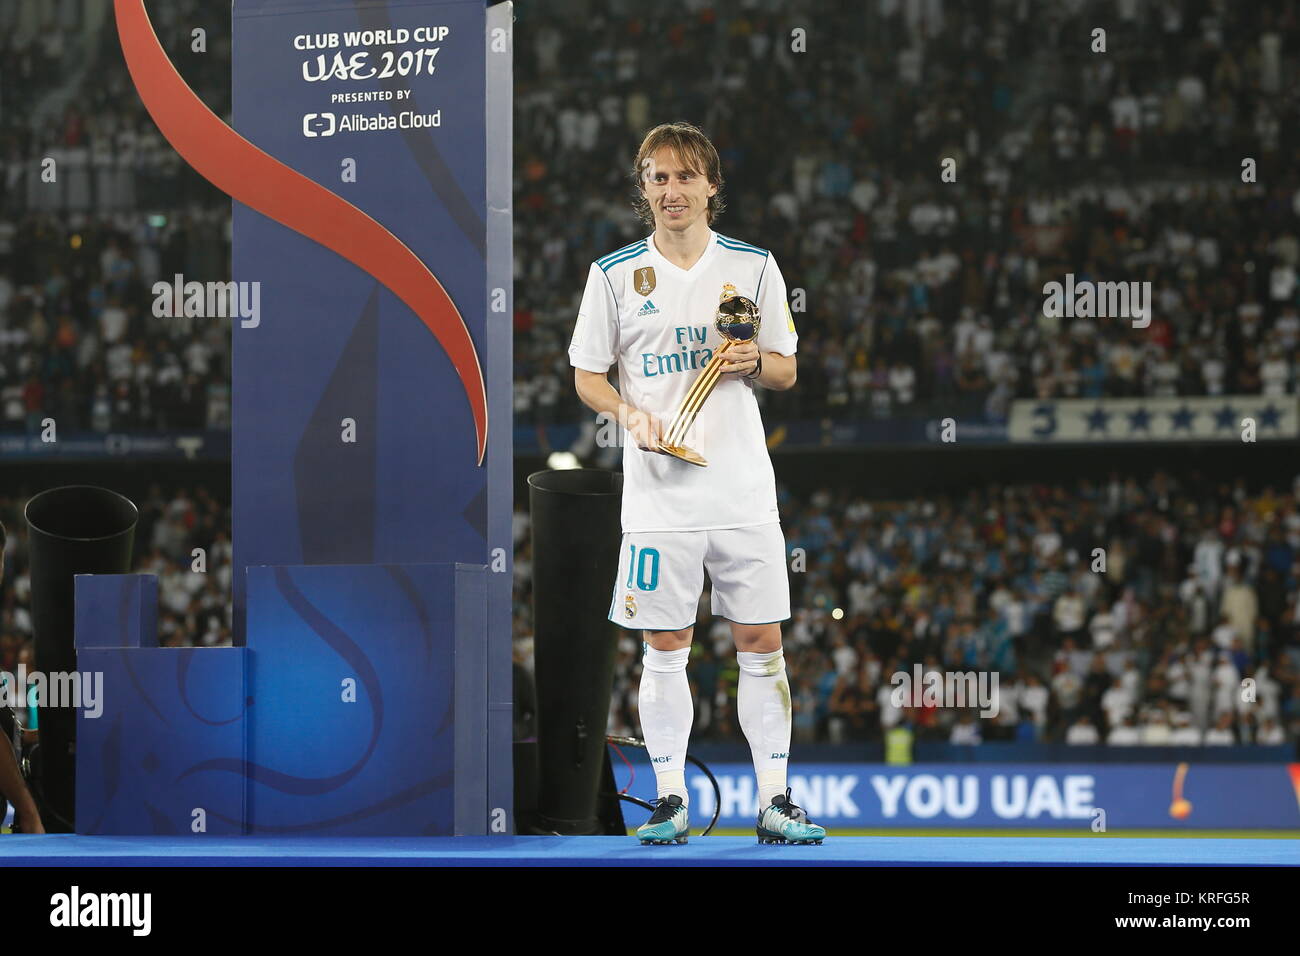 Abu Dhabi Uae 16th Dec 17 Luka Modric Real Football Soccer Modric Receive Adidas Golden Ball During Awards Ceremony Of Fifa Club World Cup Uae 17 At The Zayed Sports City Stadium